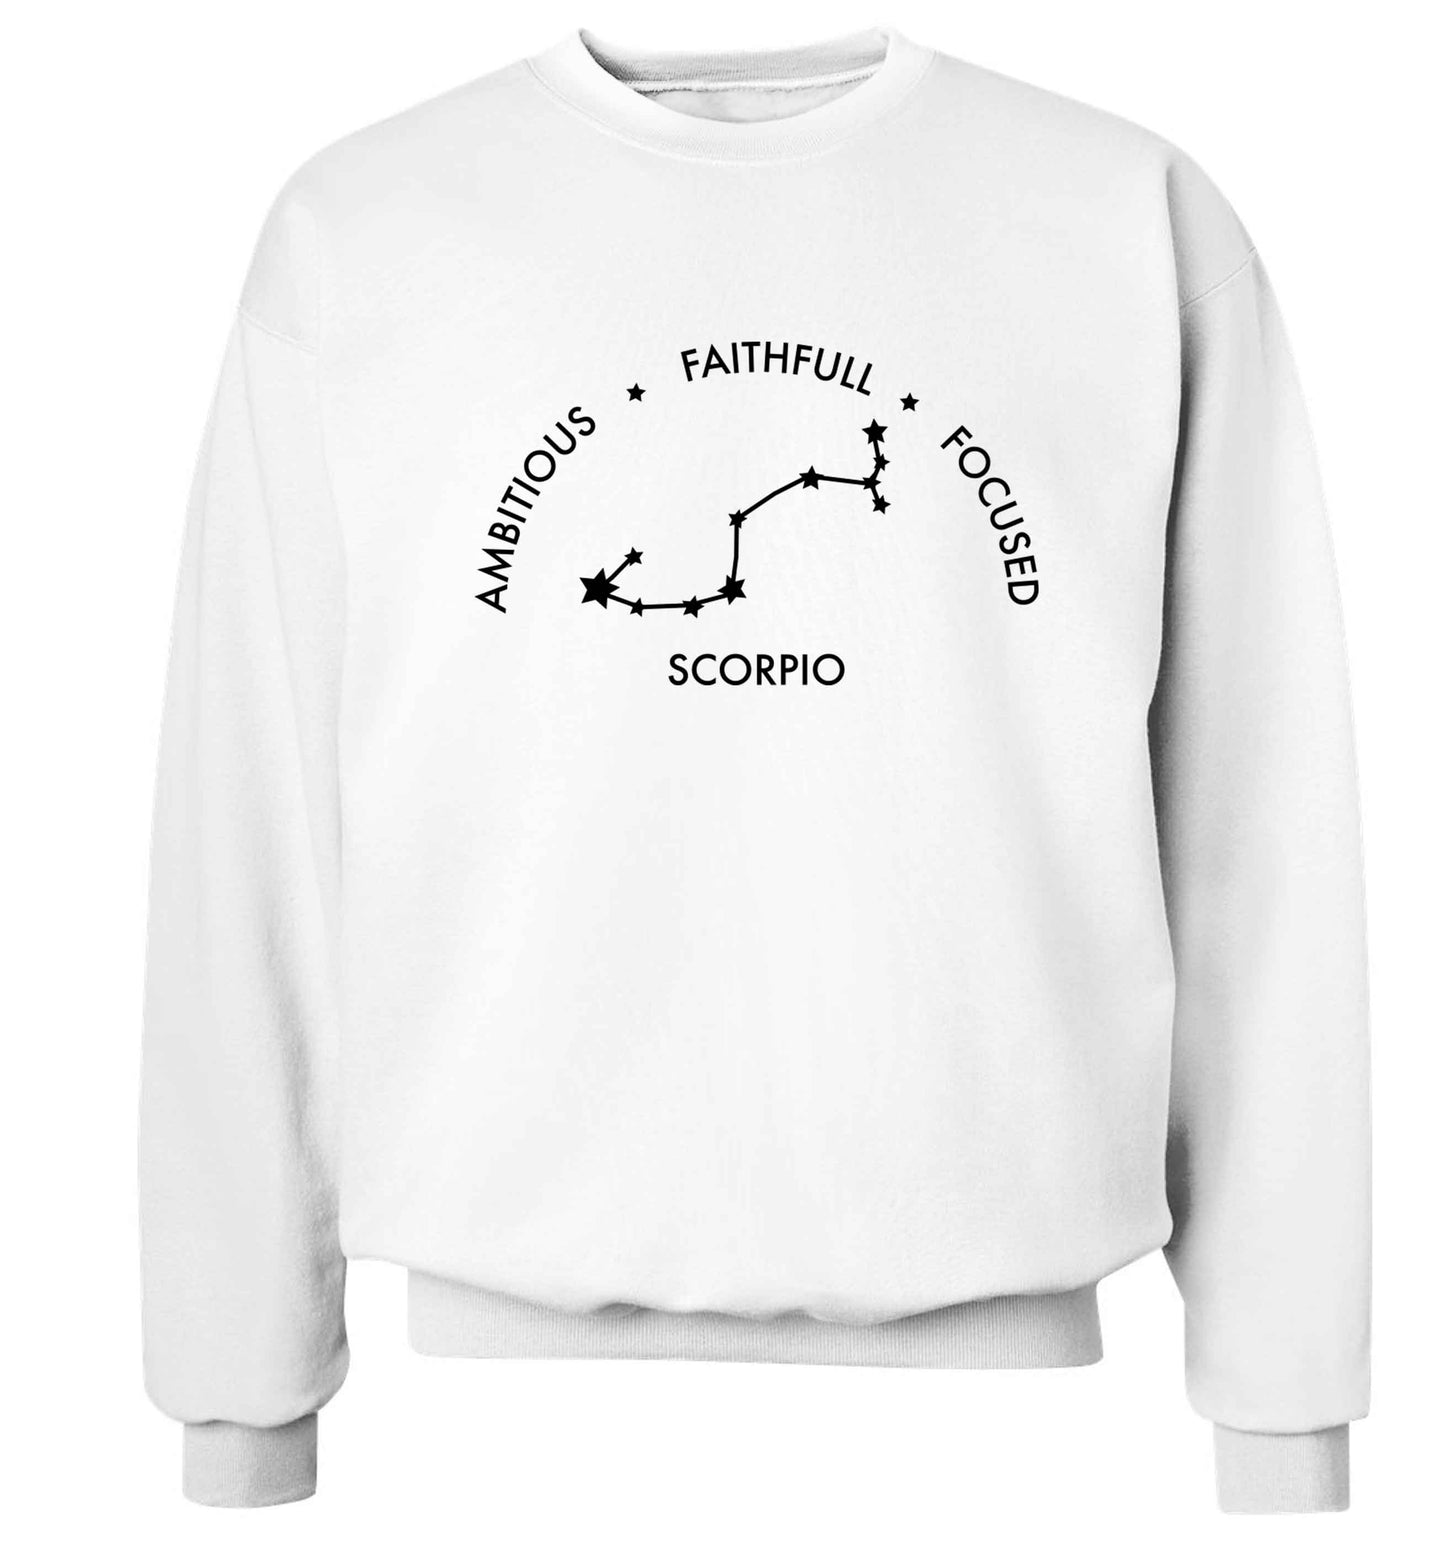 Scorpio, ambitious, faithfull, focused Adult's unisex white Sweater 2XL